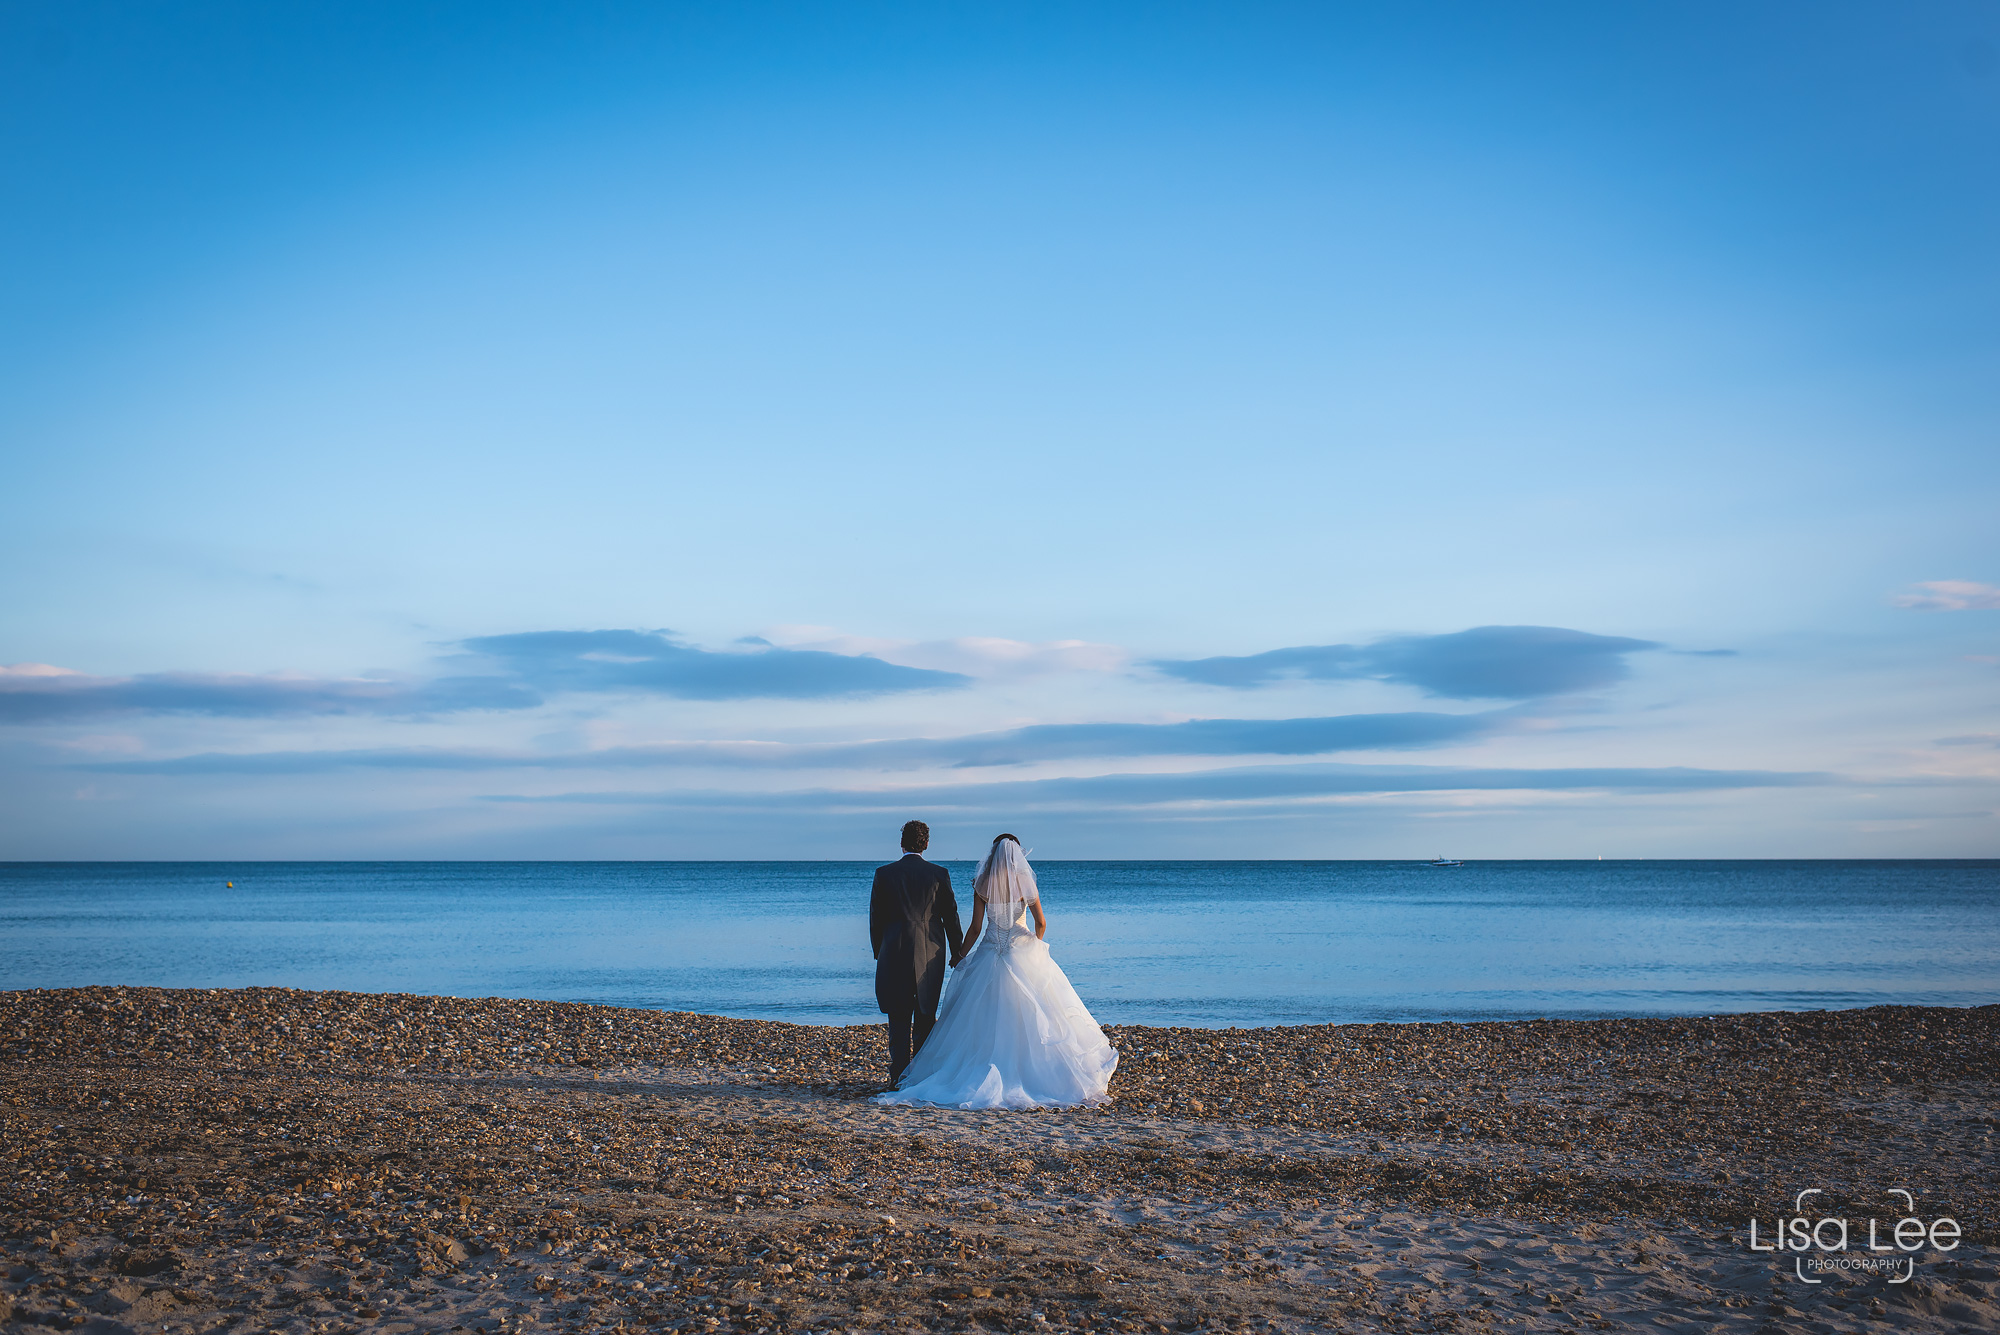 Lisa-Lee-Documentary-Wedding-Photography-beach-weddings.jpg